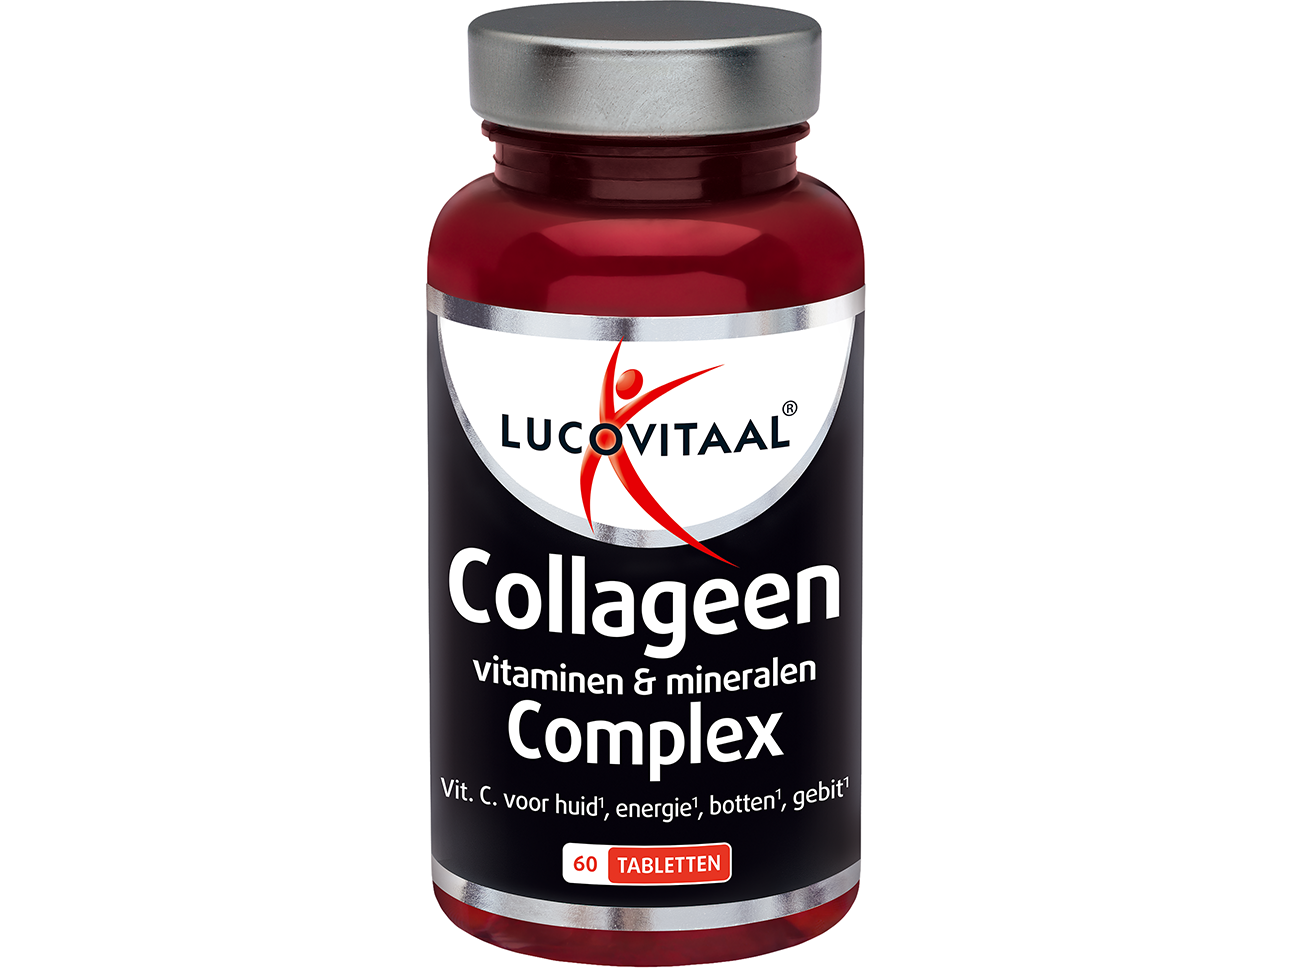 lucovitaal-collageen-complex-3x-60-tabletten